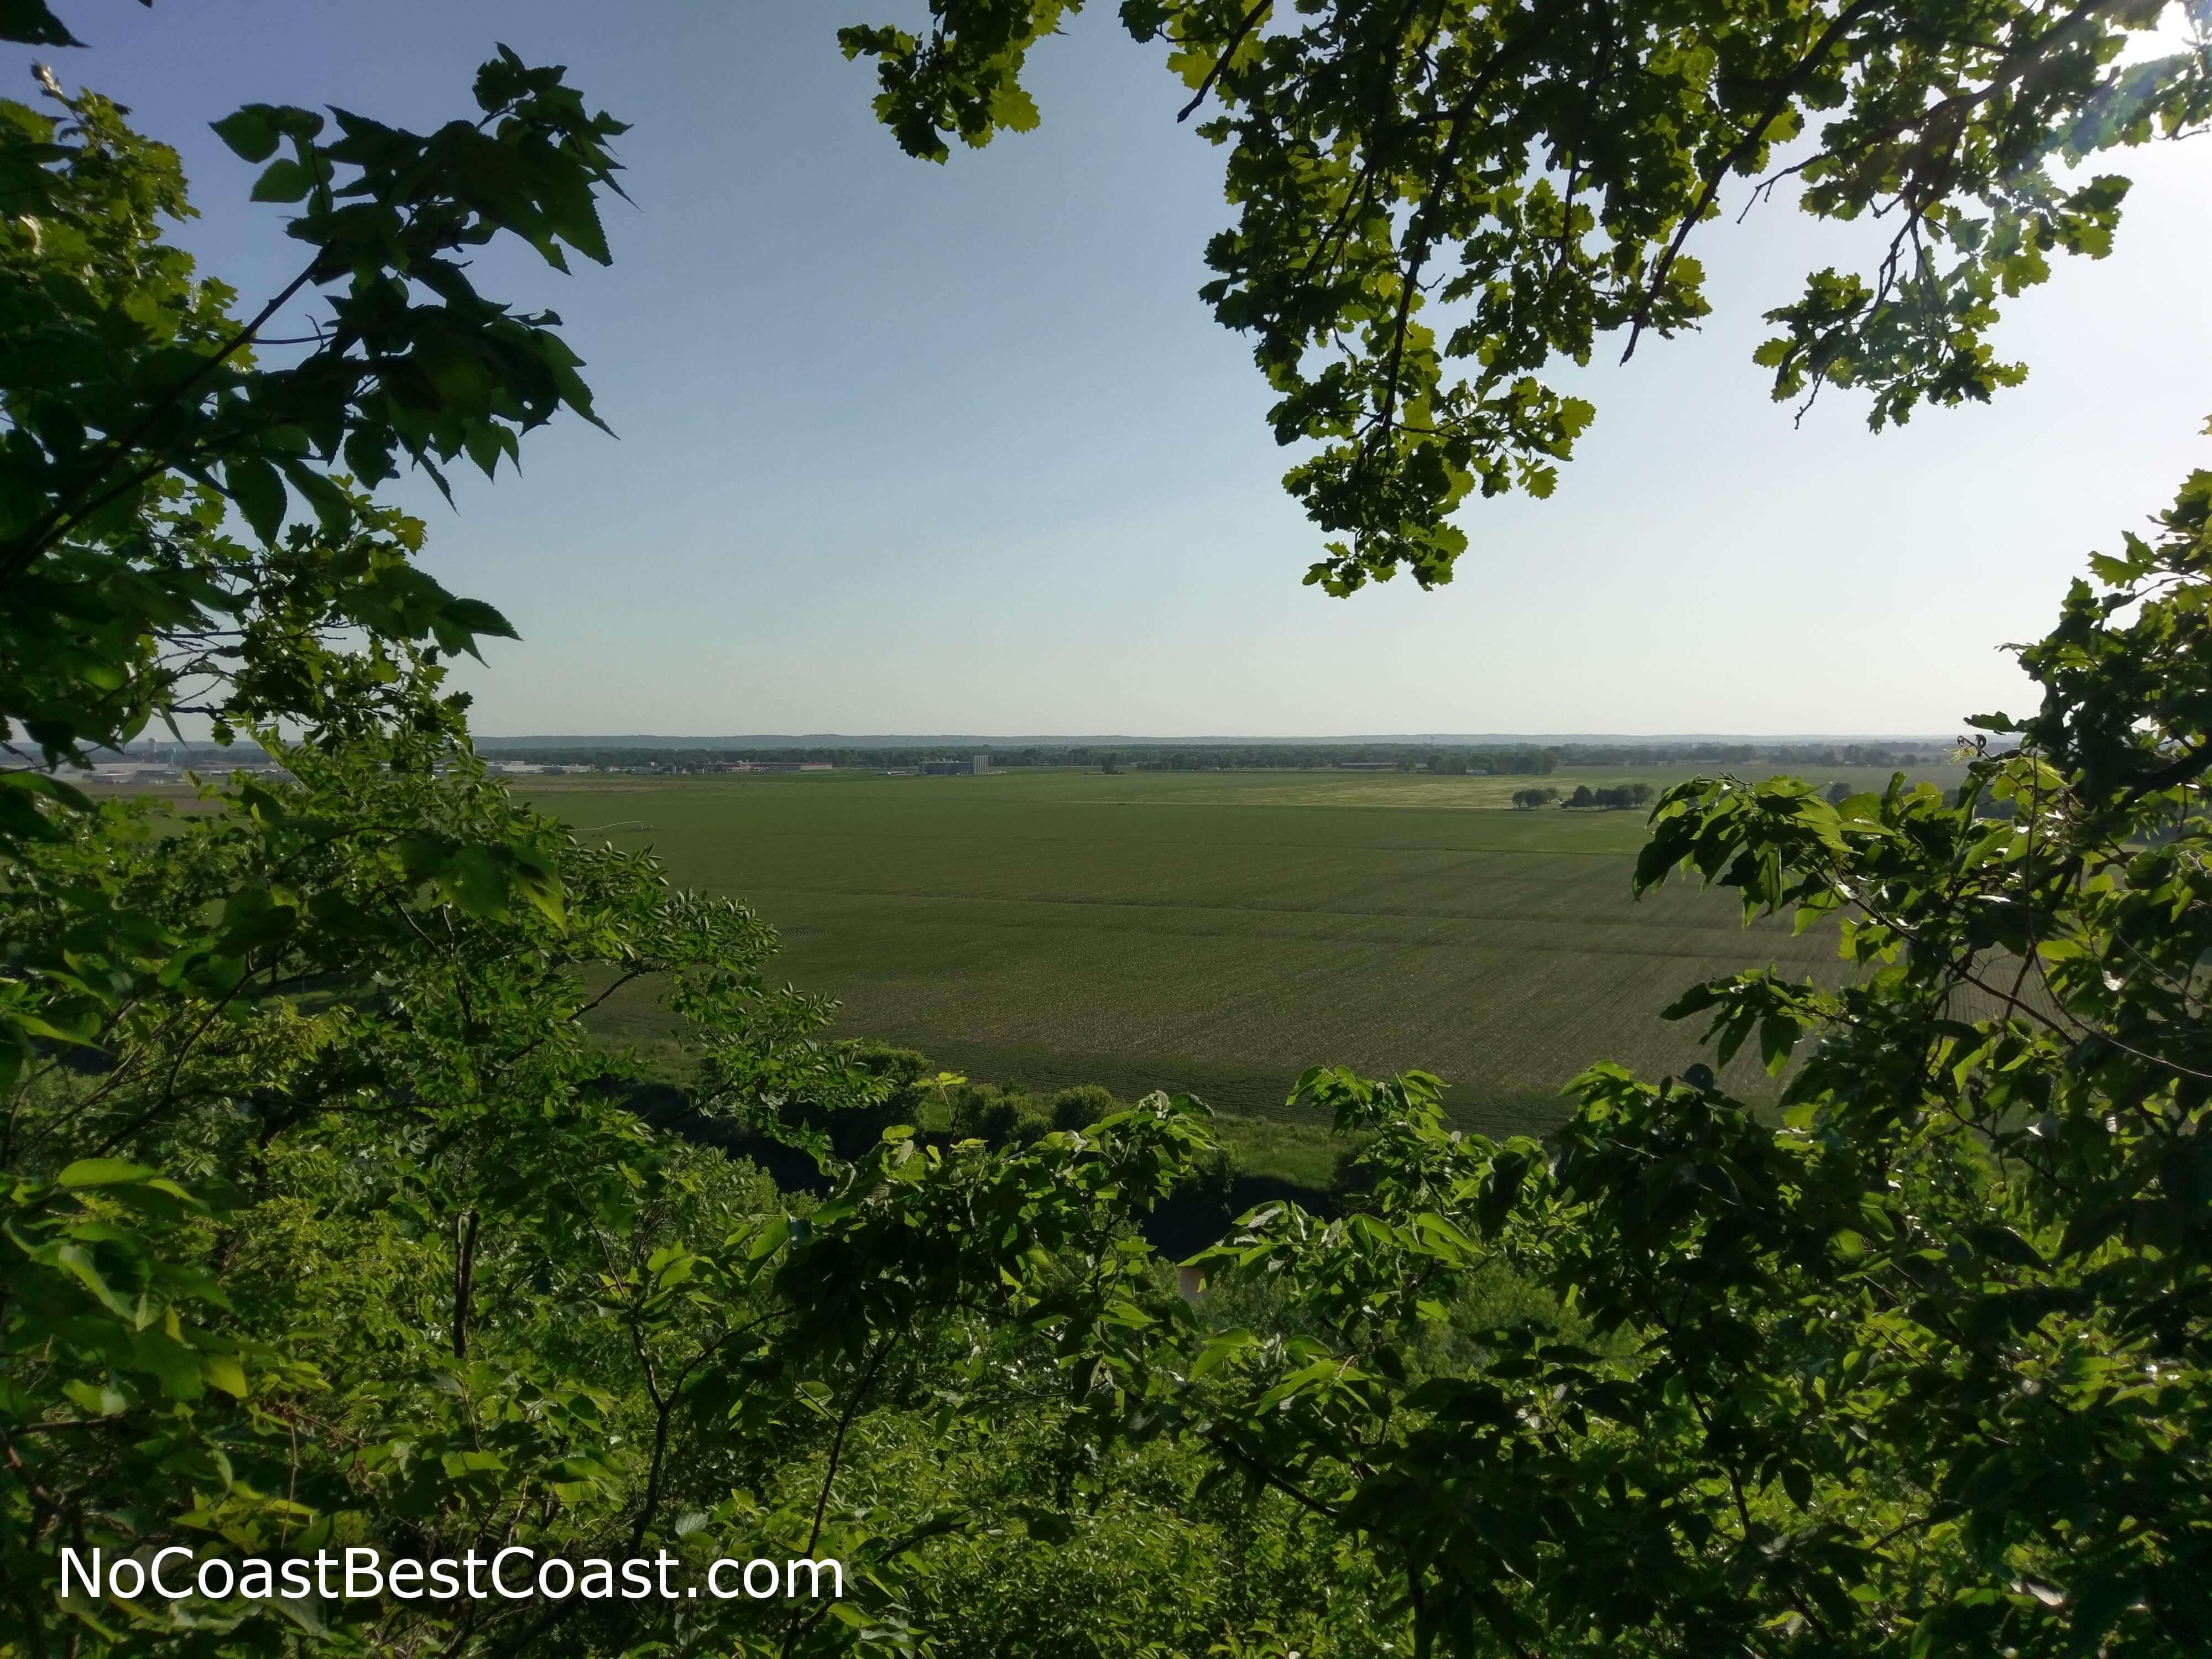 The overlook's scenic view extending into South Dakota and Nebraska